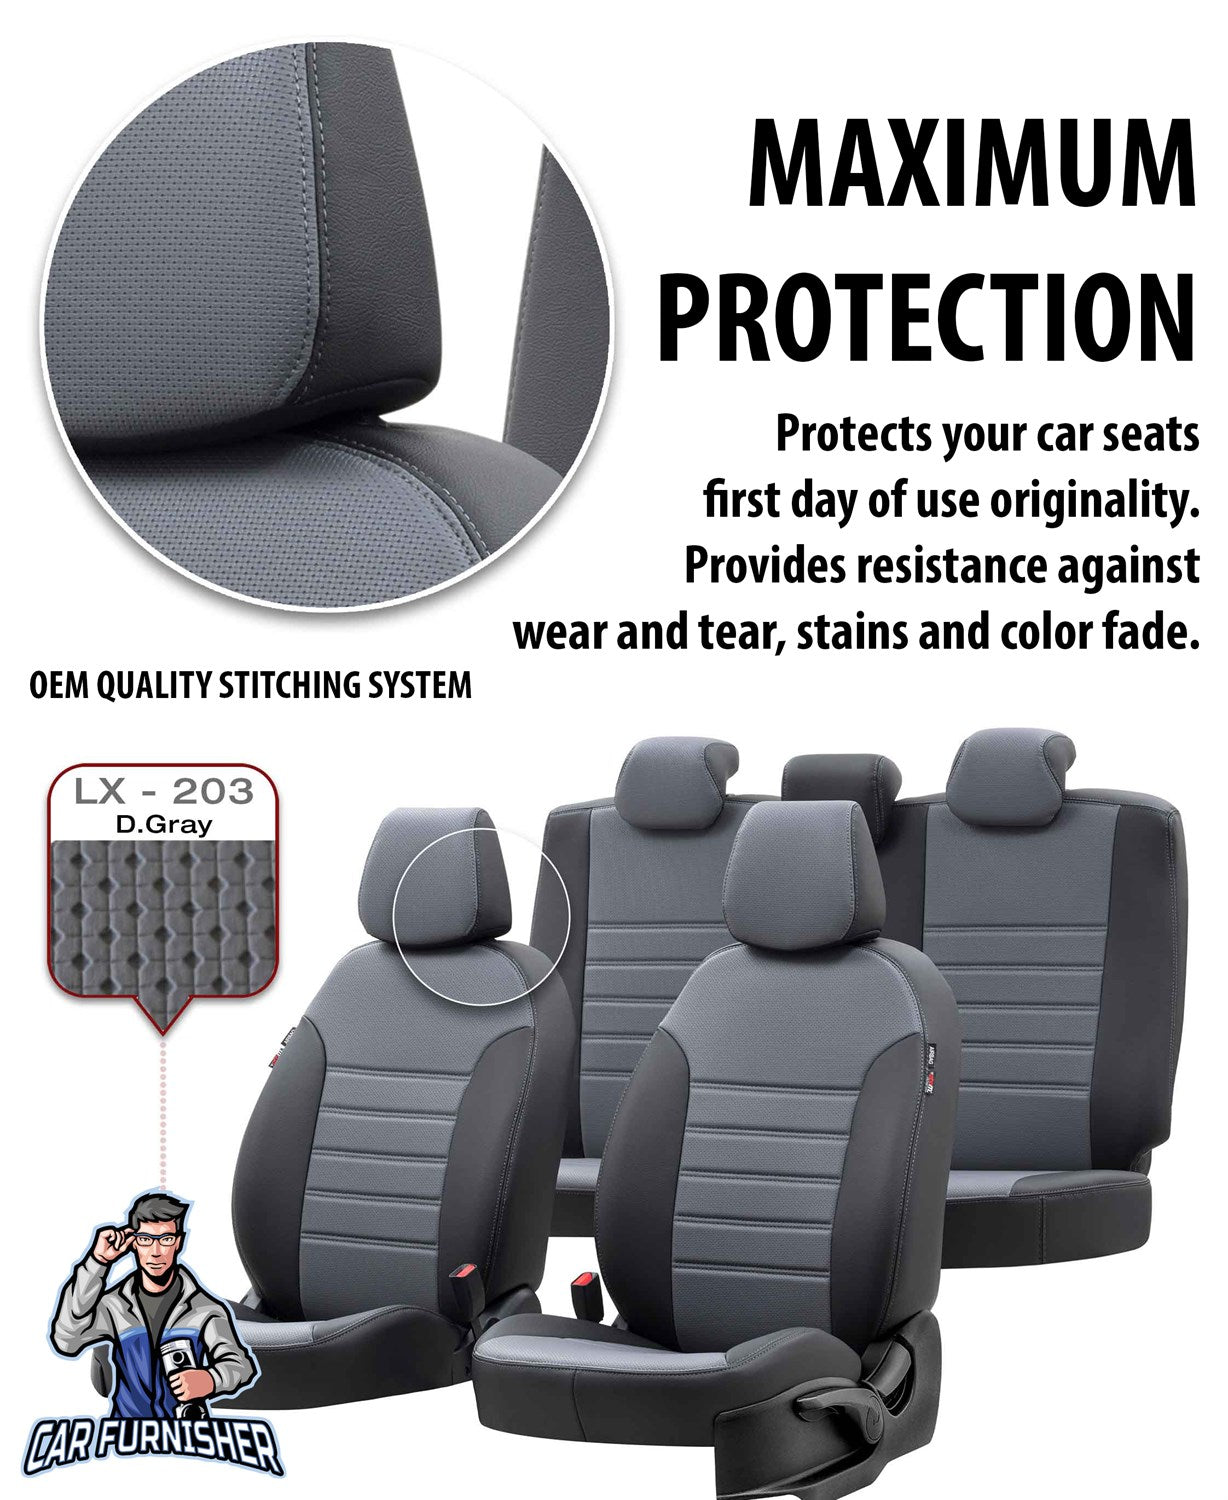 Daewoo Tacuma Seat Covers New York Leather Design Smoked Black Leather